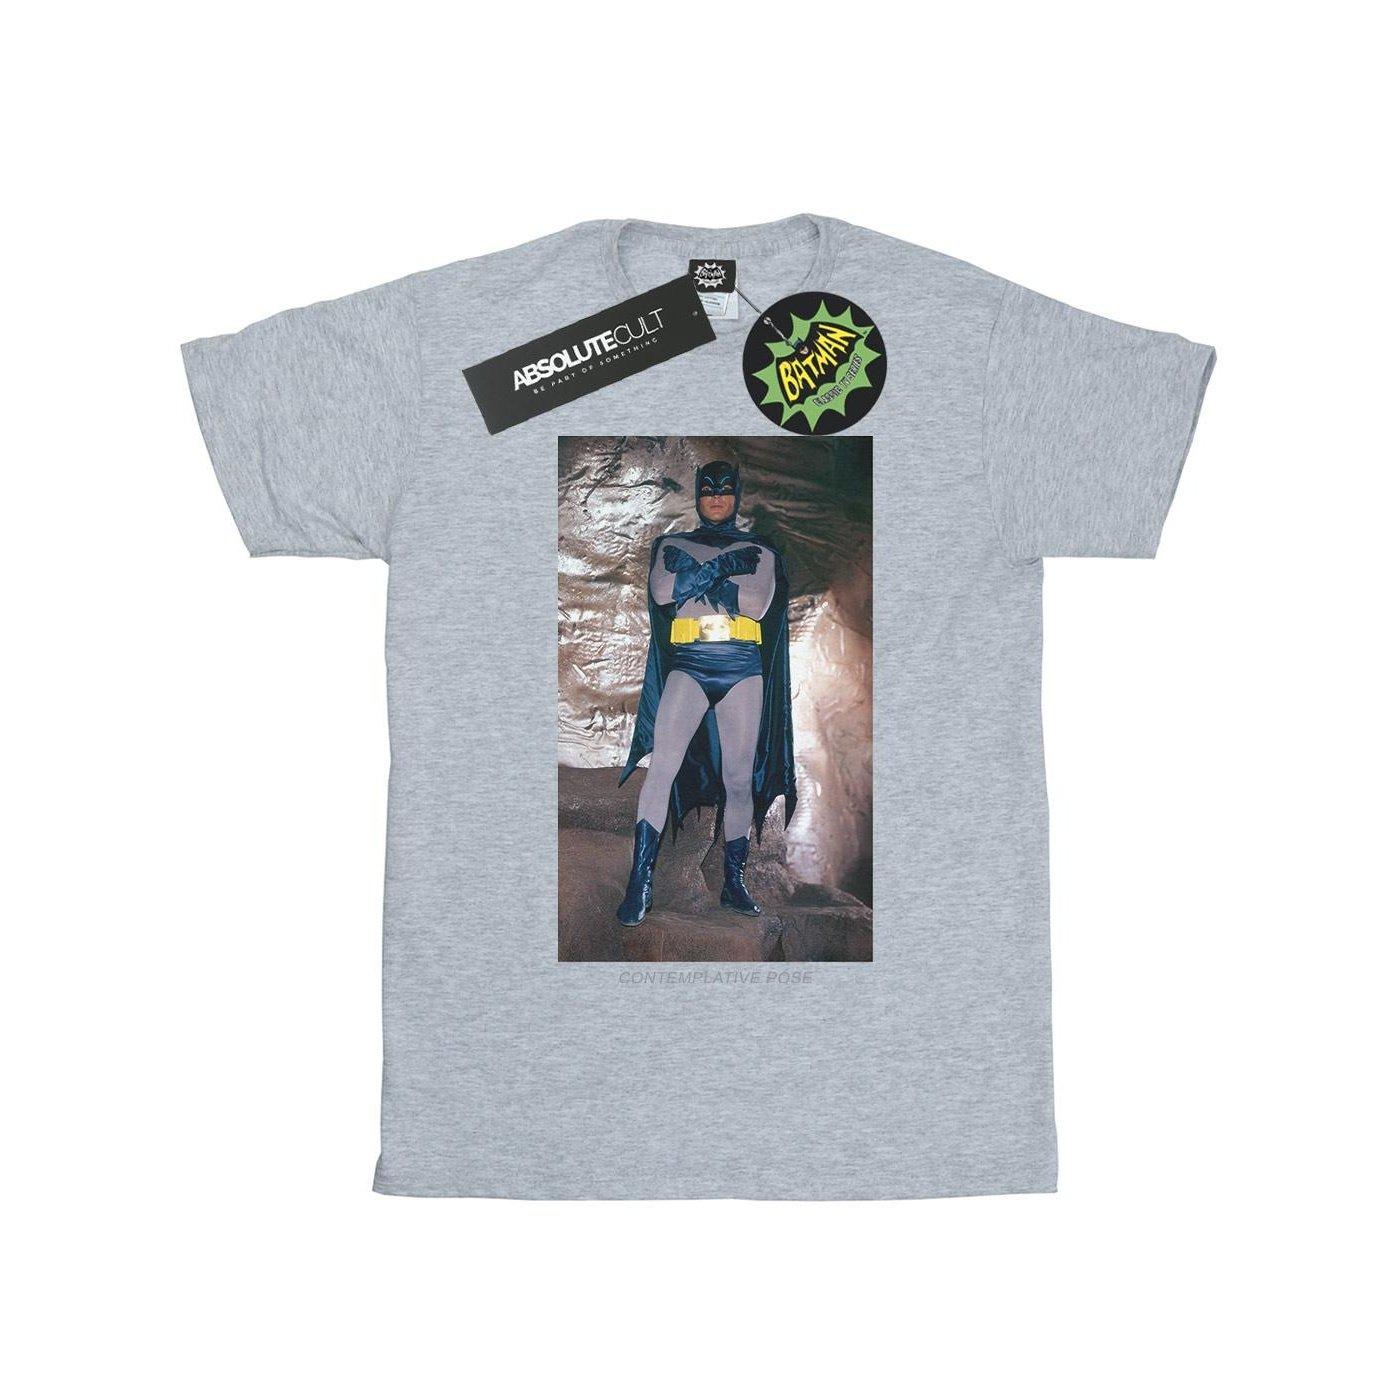 Batman Tv Series Contemplative Pose Tshirt Jungen Grau 128 von DC COMICS